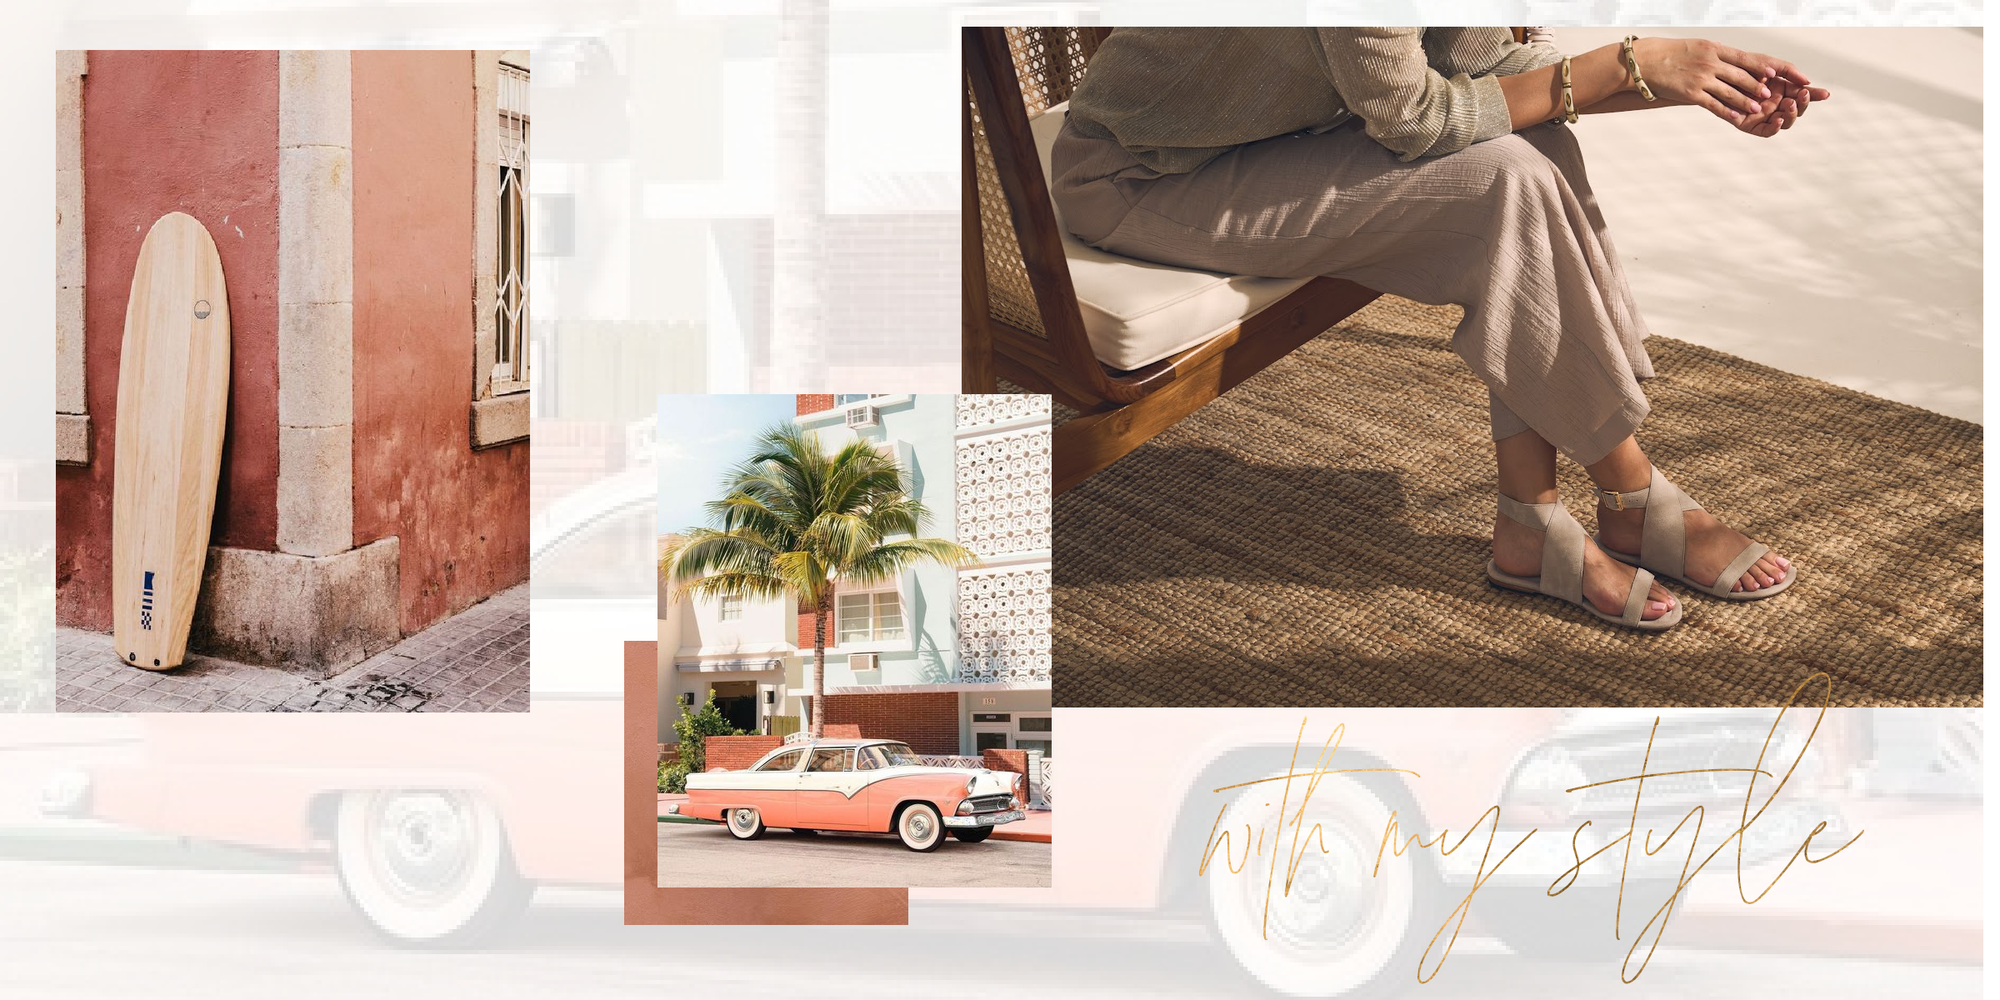 With My Sands | Sandales en cuir| LookBook Voyage La Havane | Inspirations Style de vie